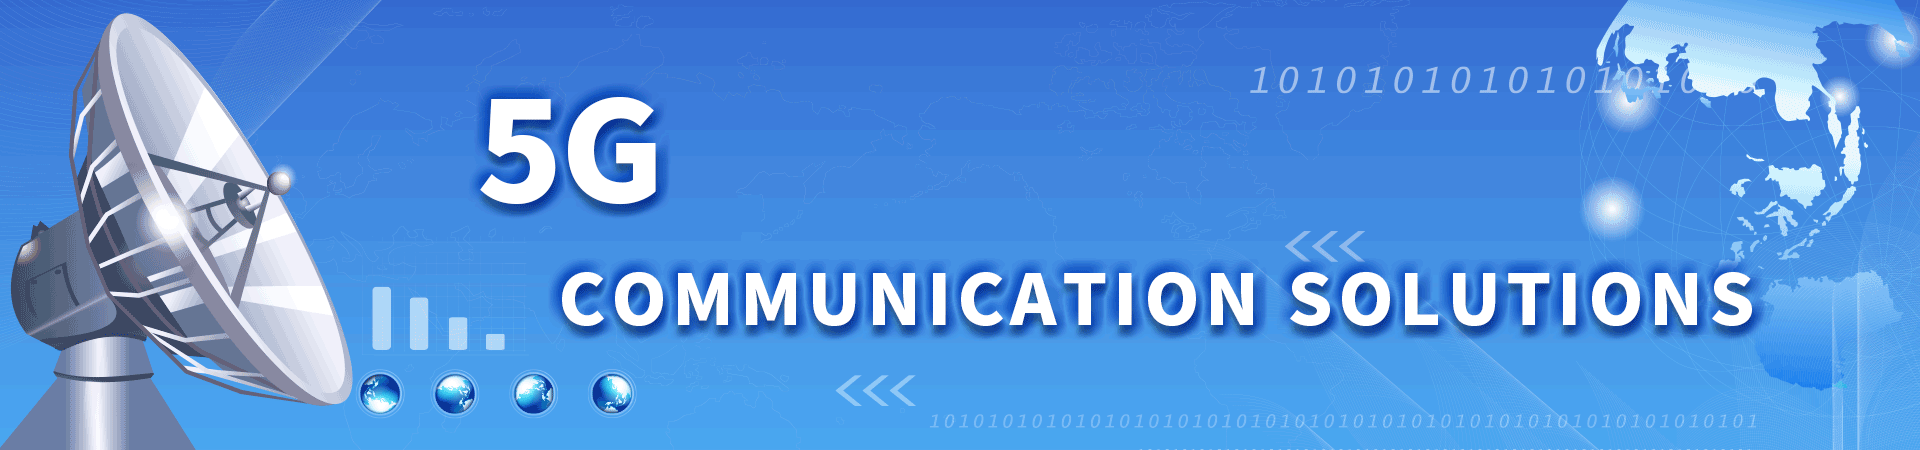 5G Communication